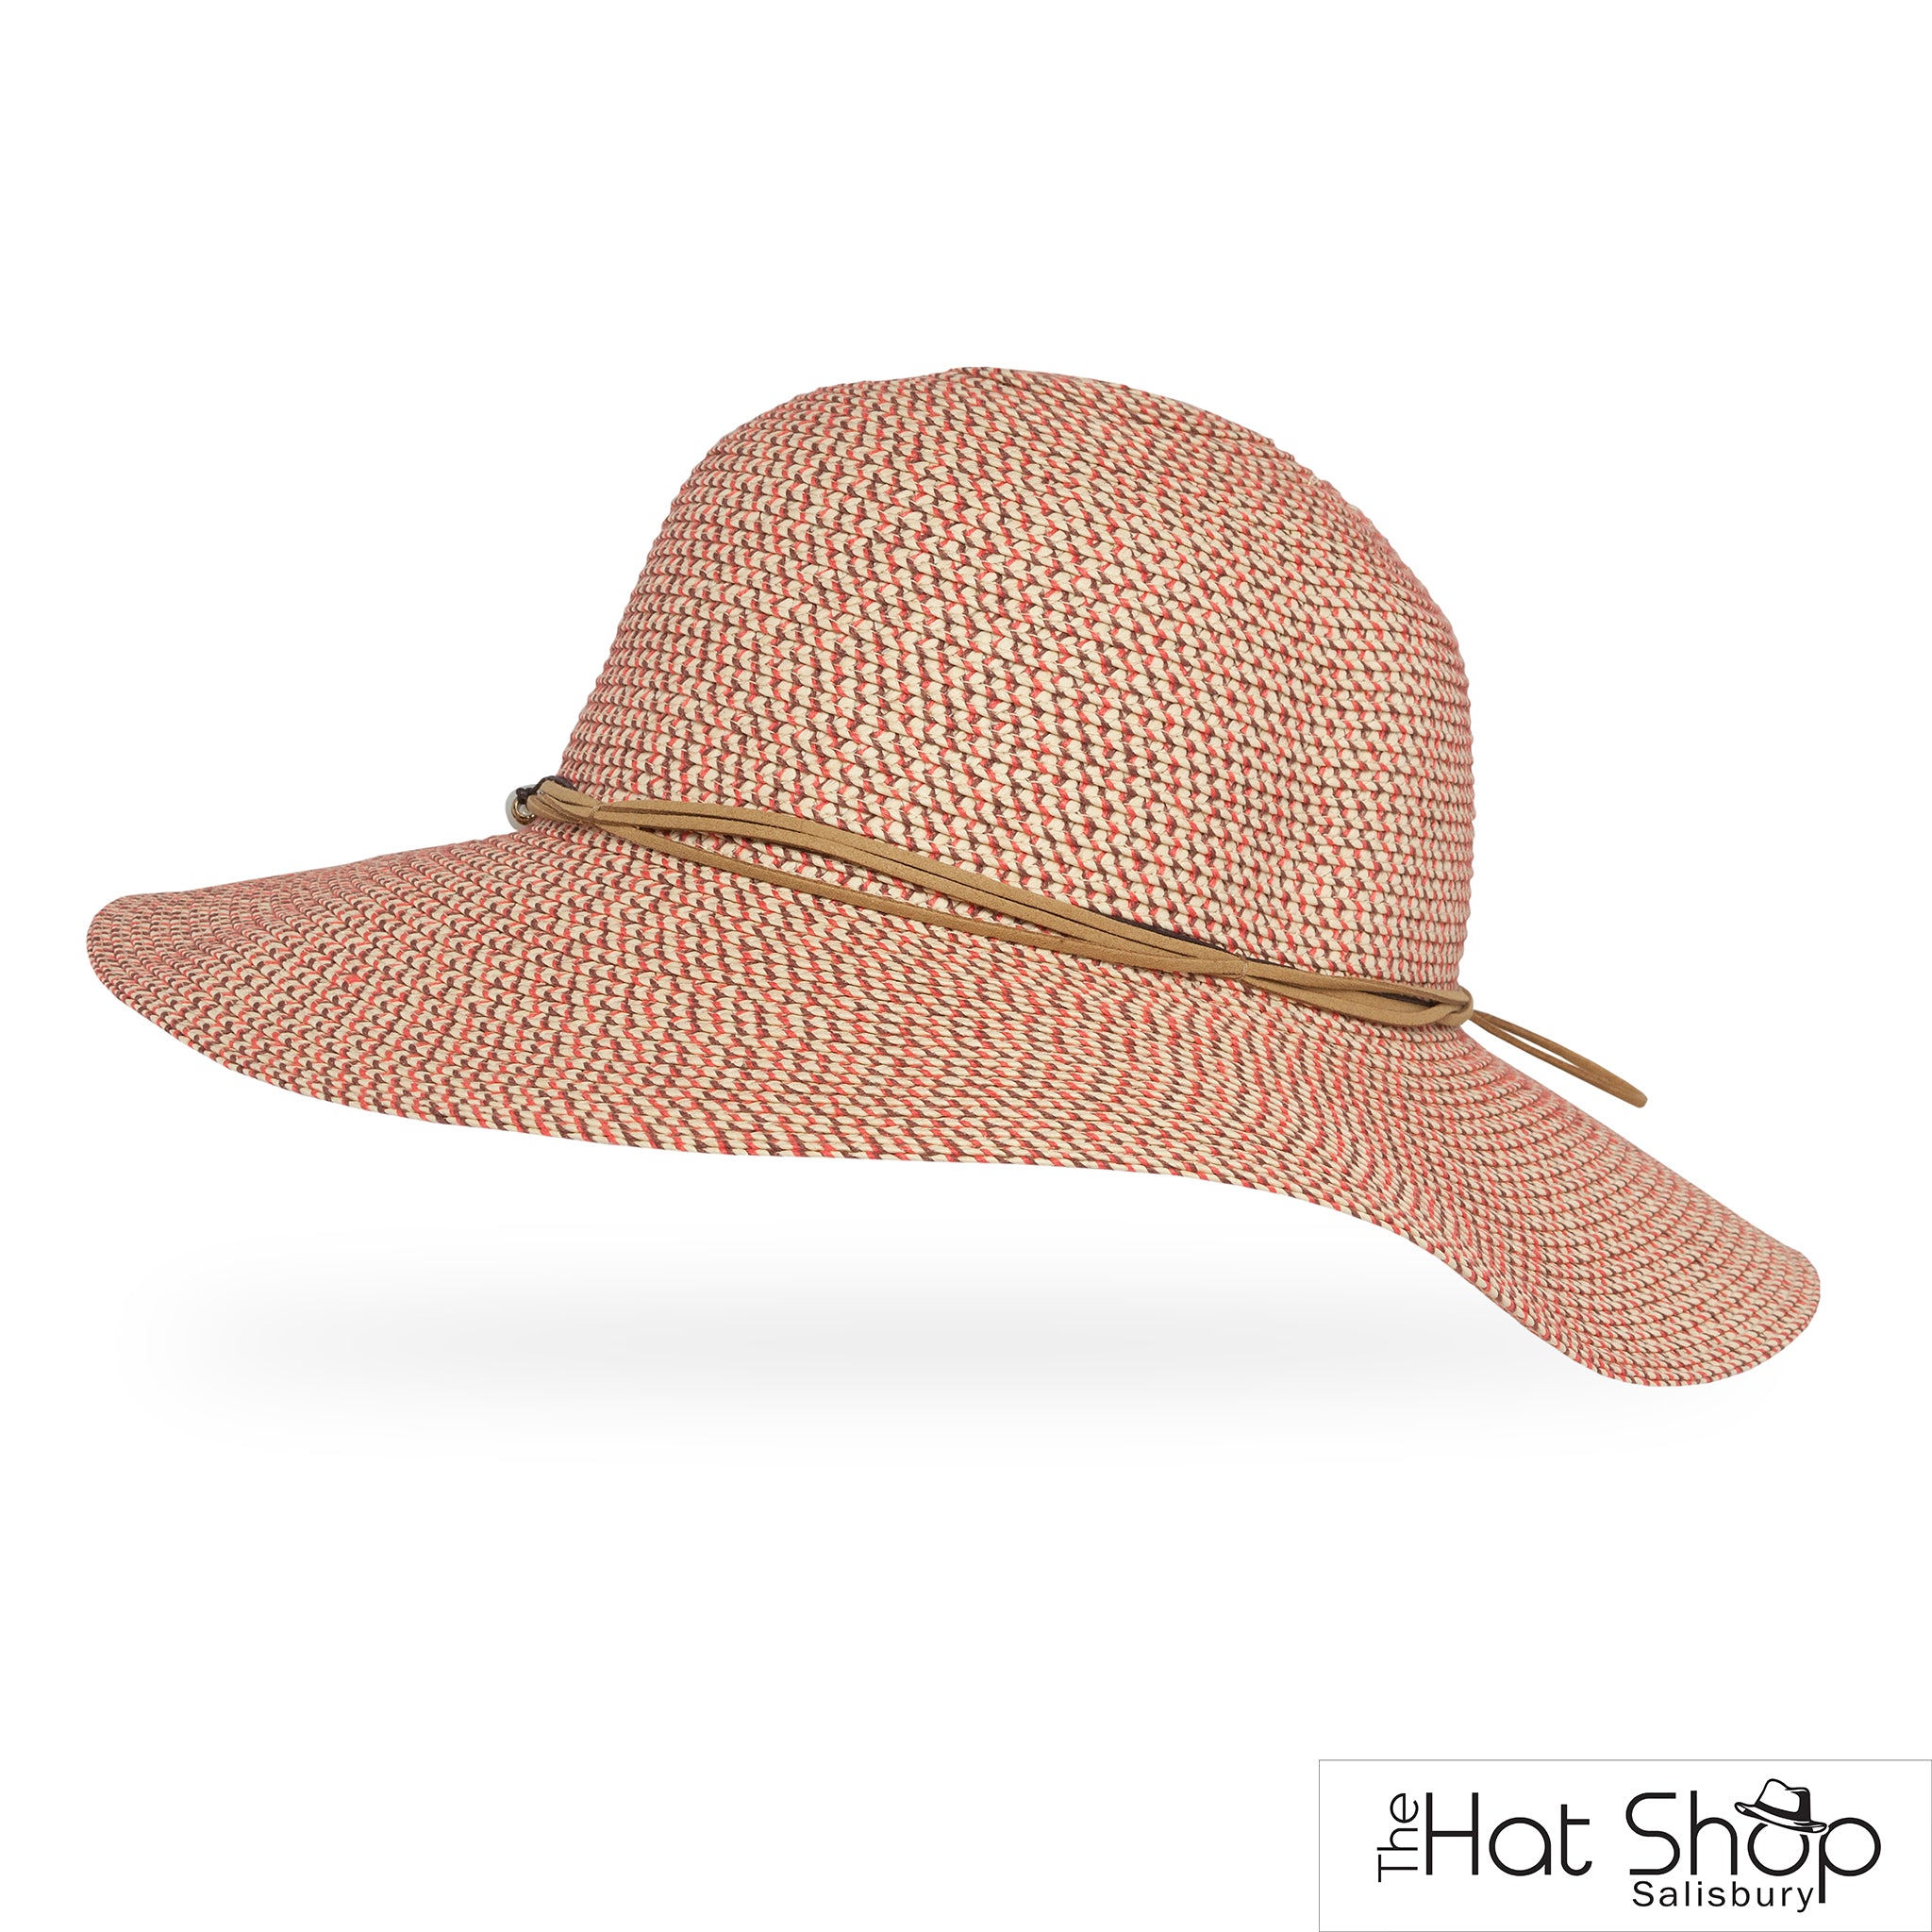 The Hat Shop Salisbury Ladies Sunday Afternoon Sun Hat Sol Seeker Red Sand